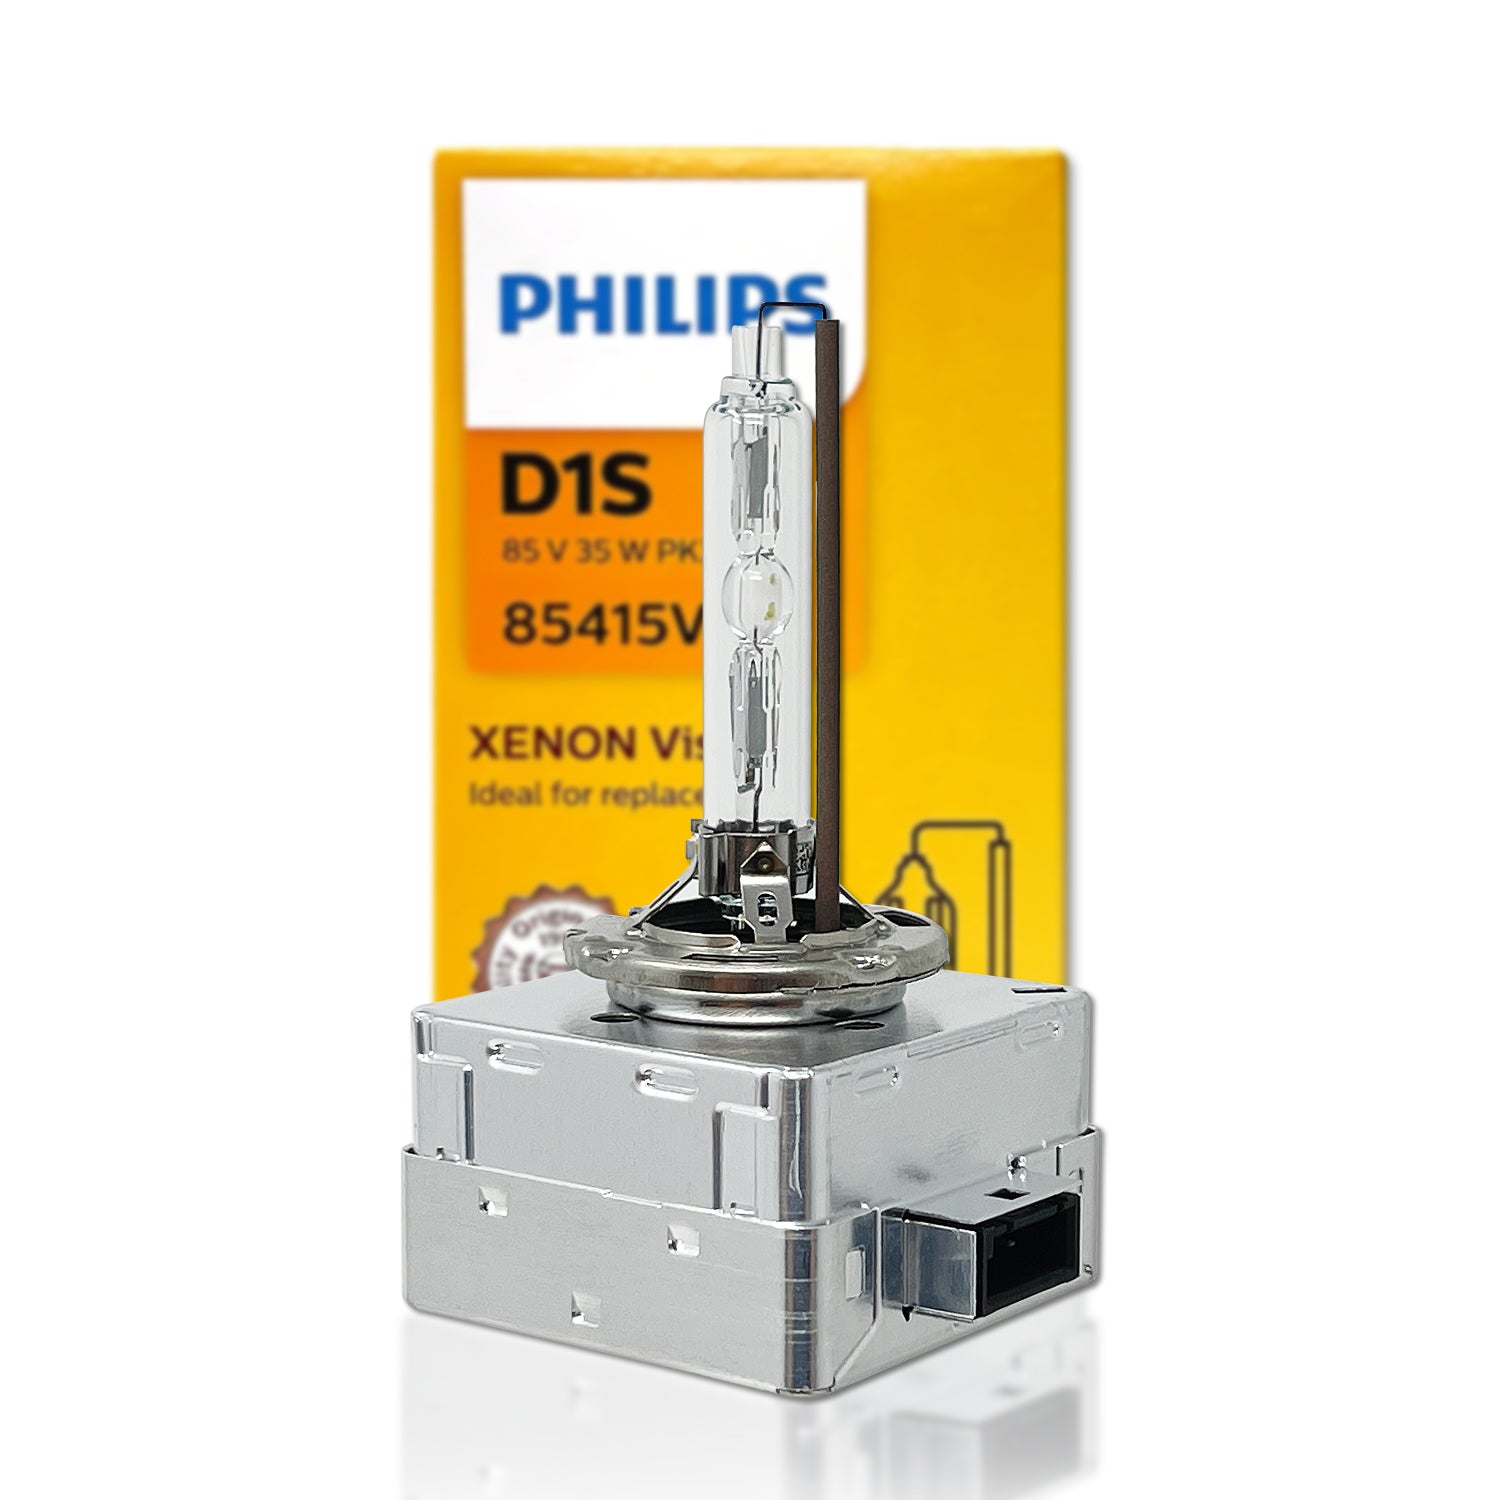 Philips XenStart D1S 35w